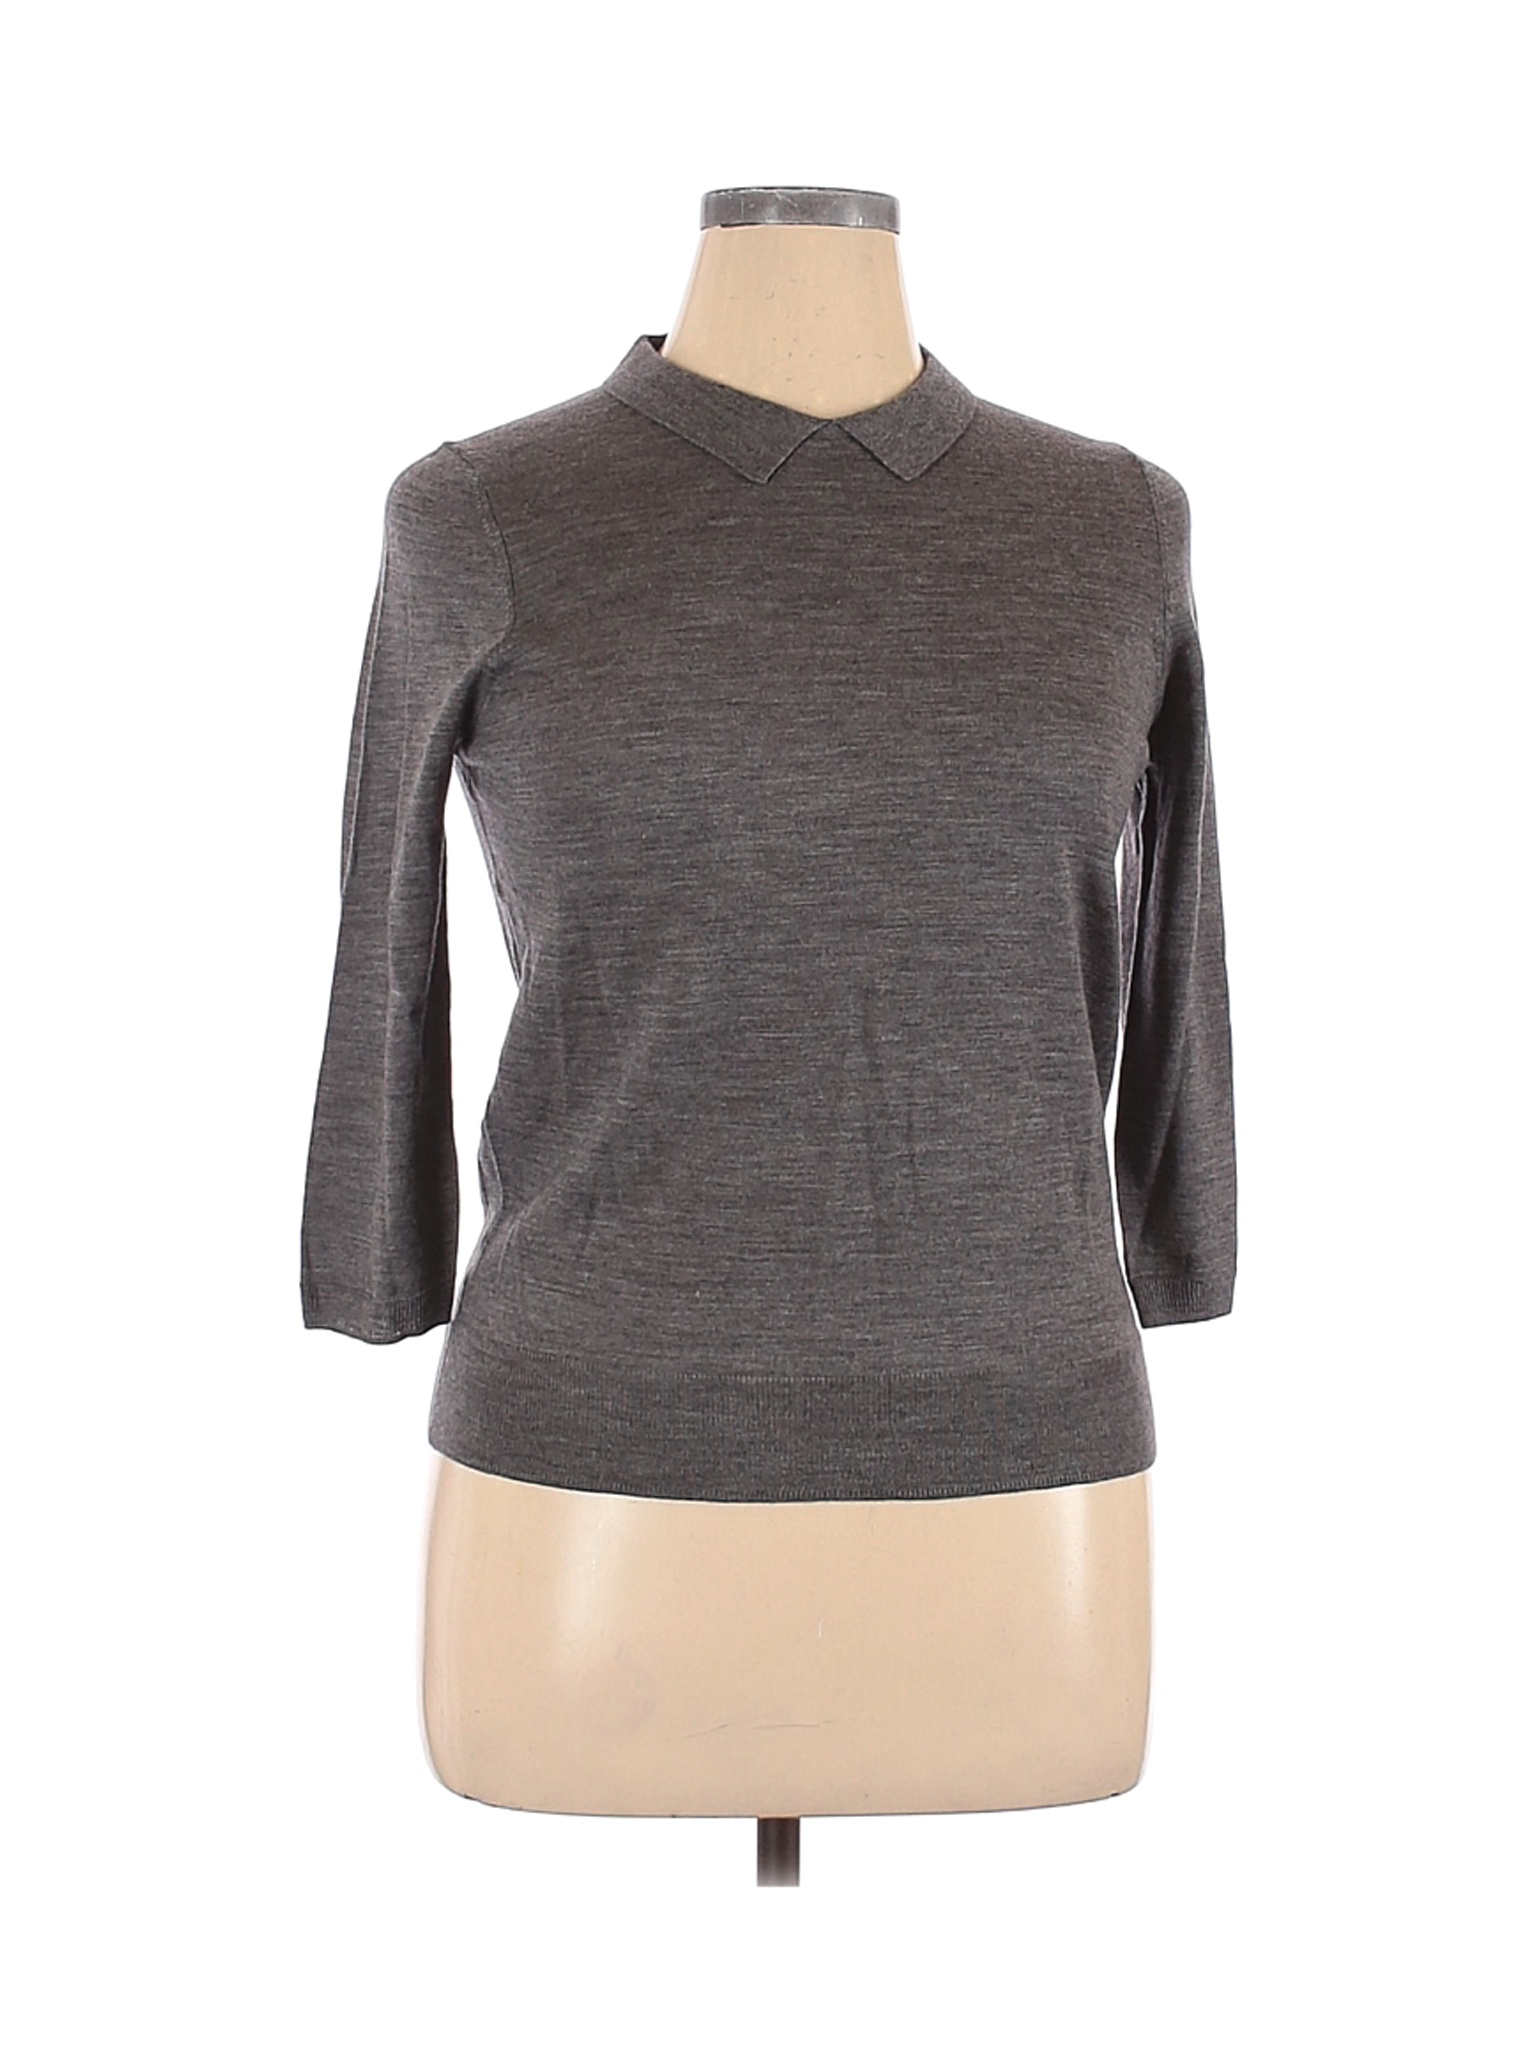 Ann Taylor Women Gray Wool Pullover Sweater XL Petites | eBay